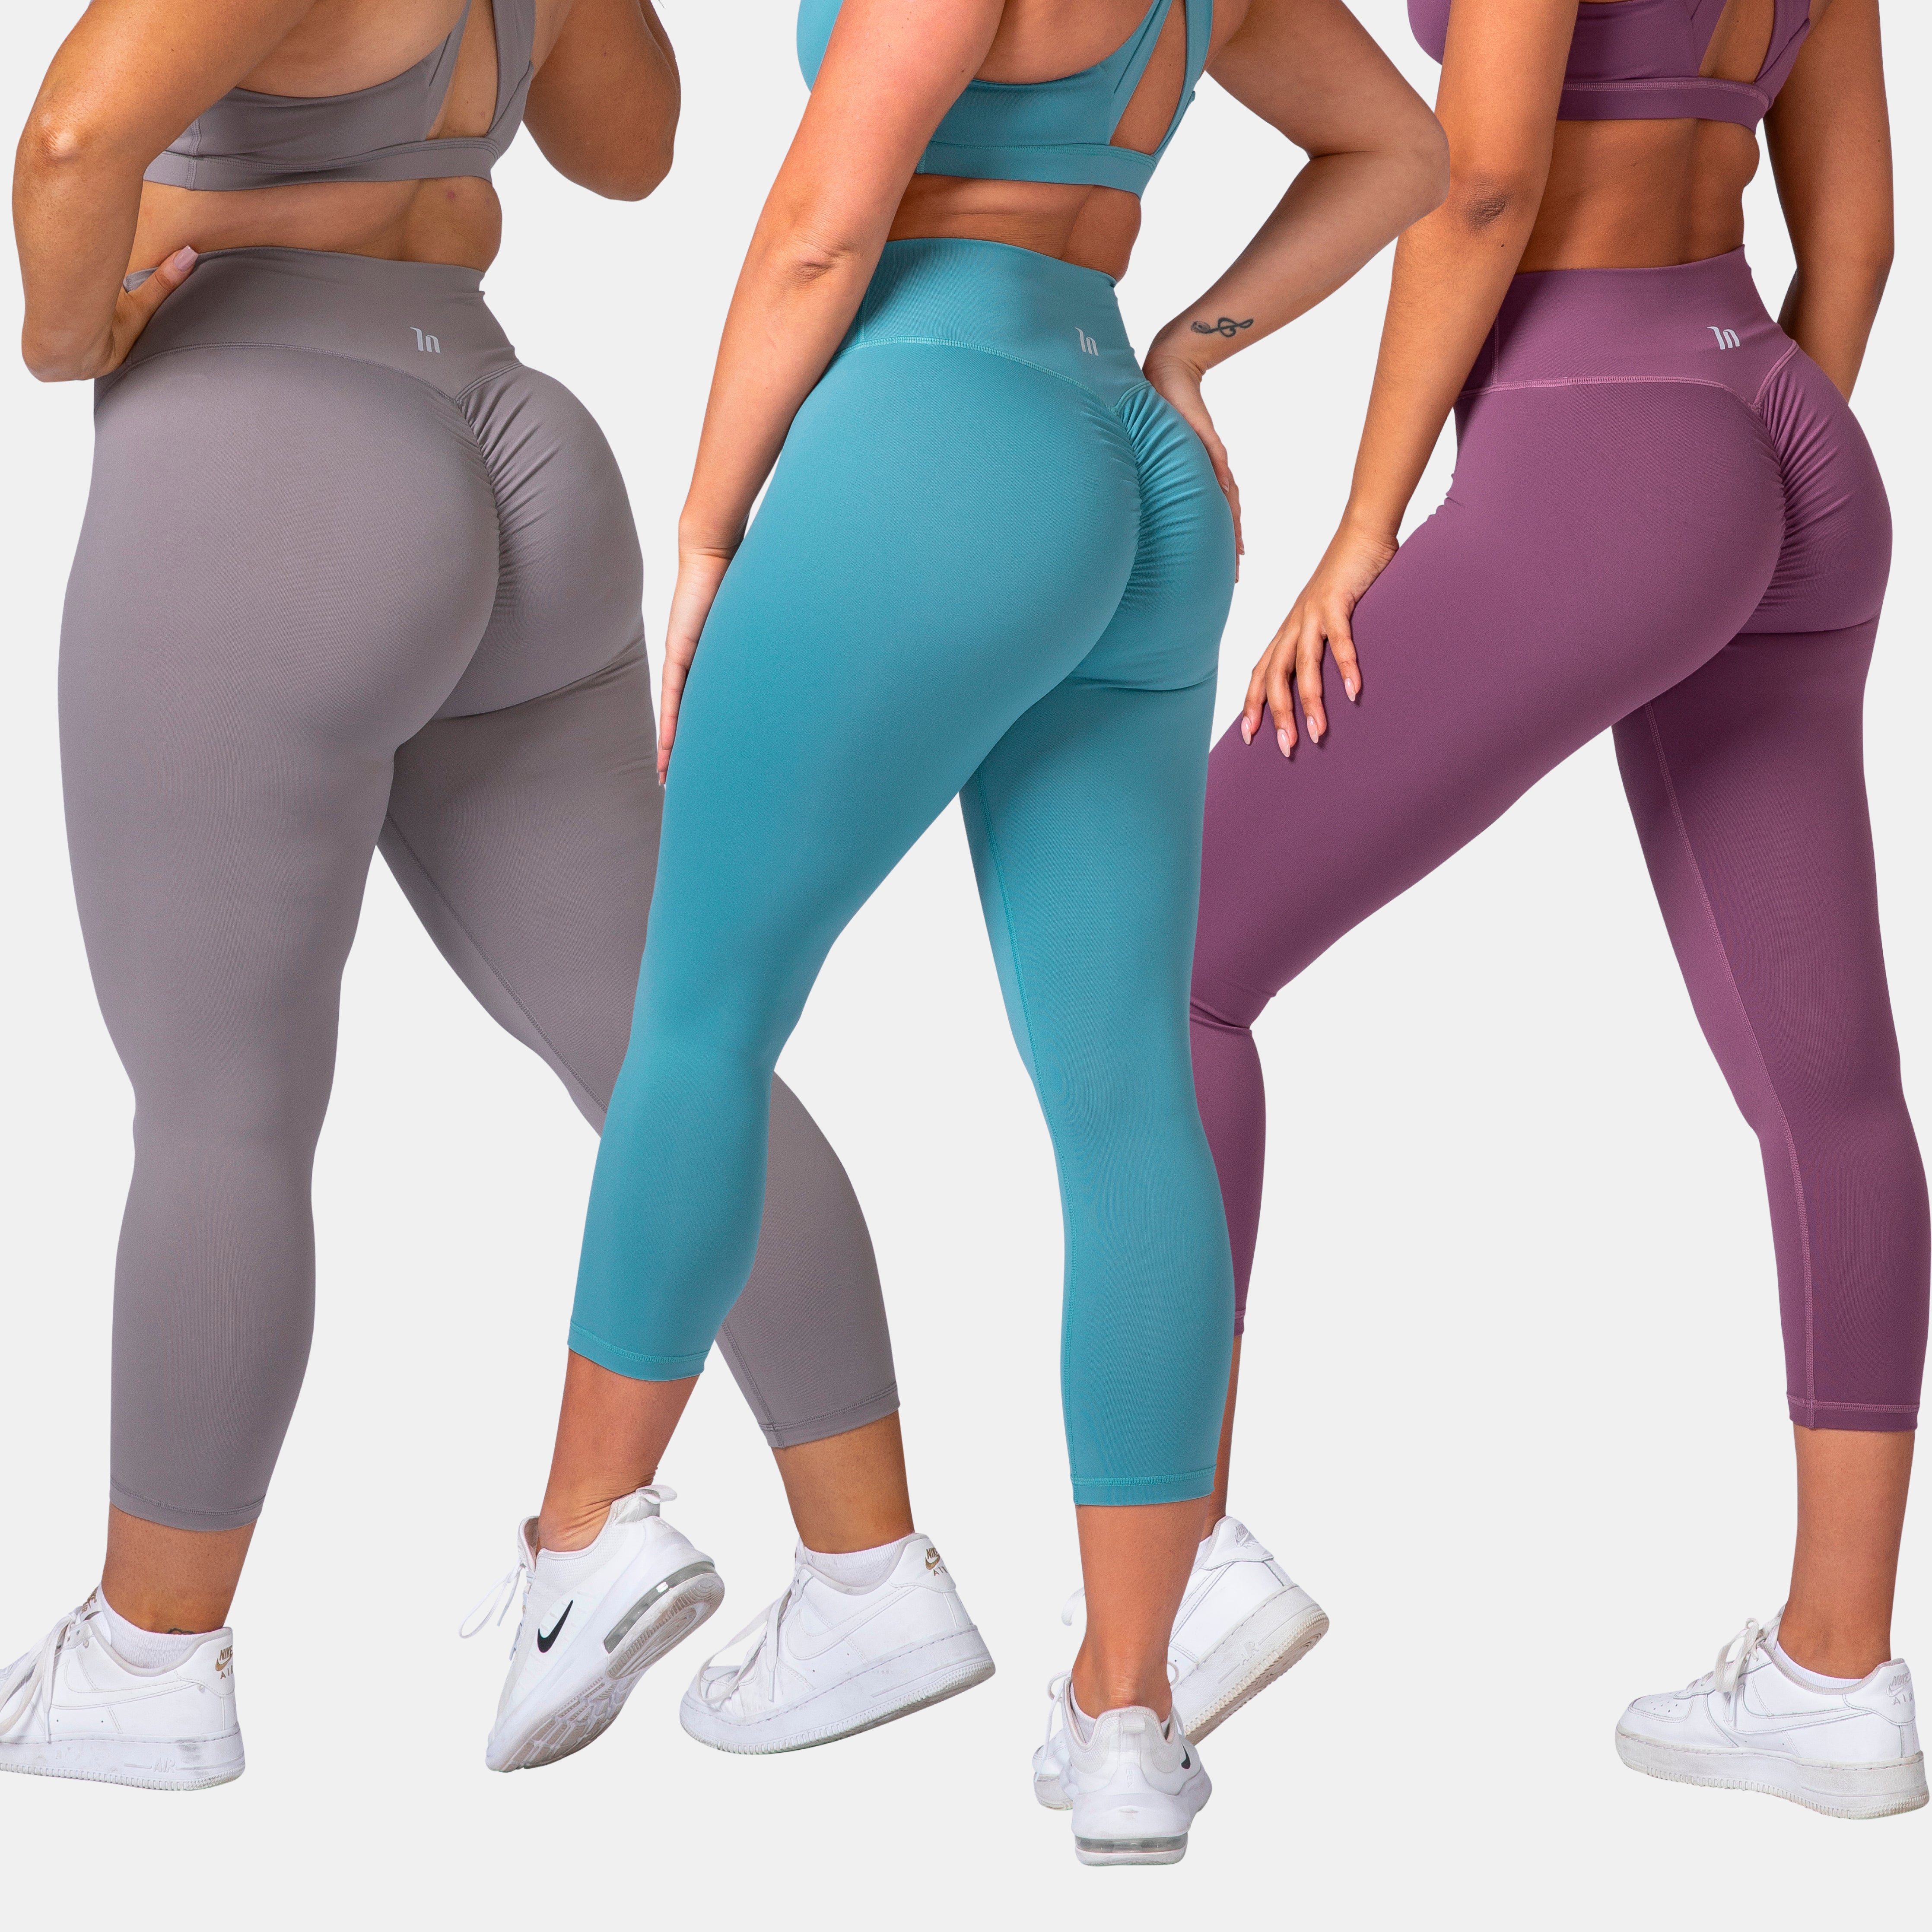 Do you have those gathered bum-enhancing gym, leggings?